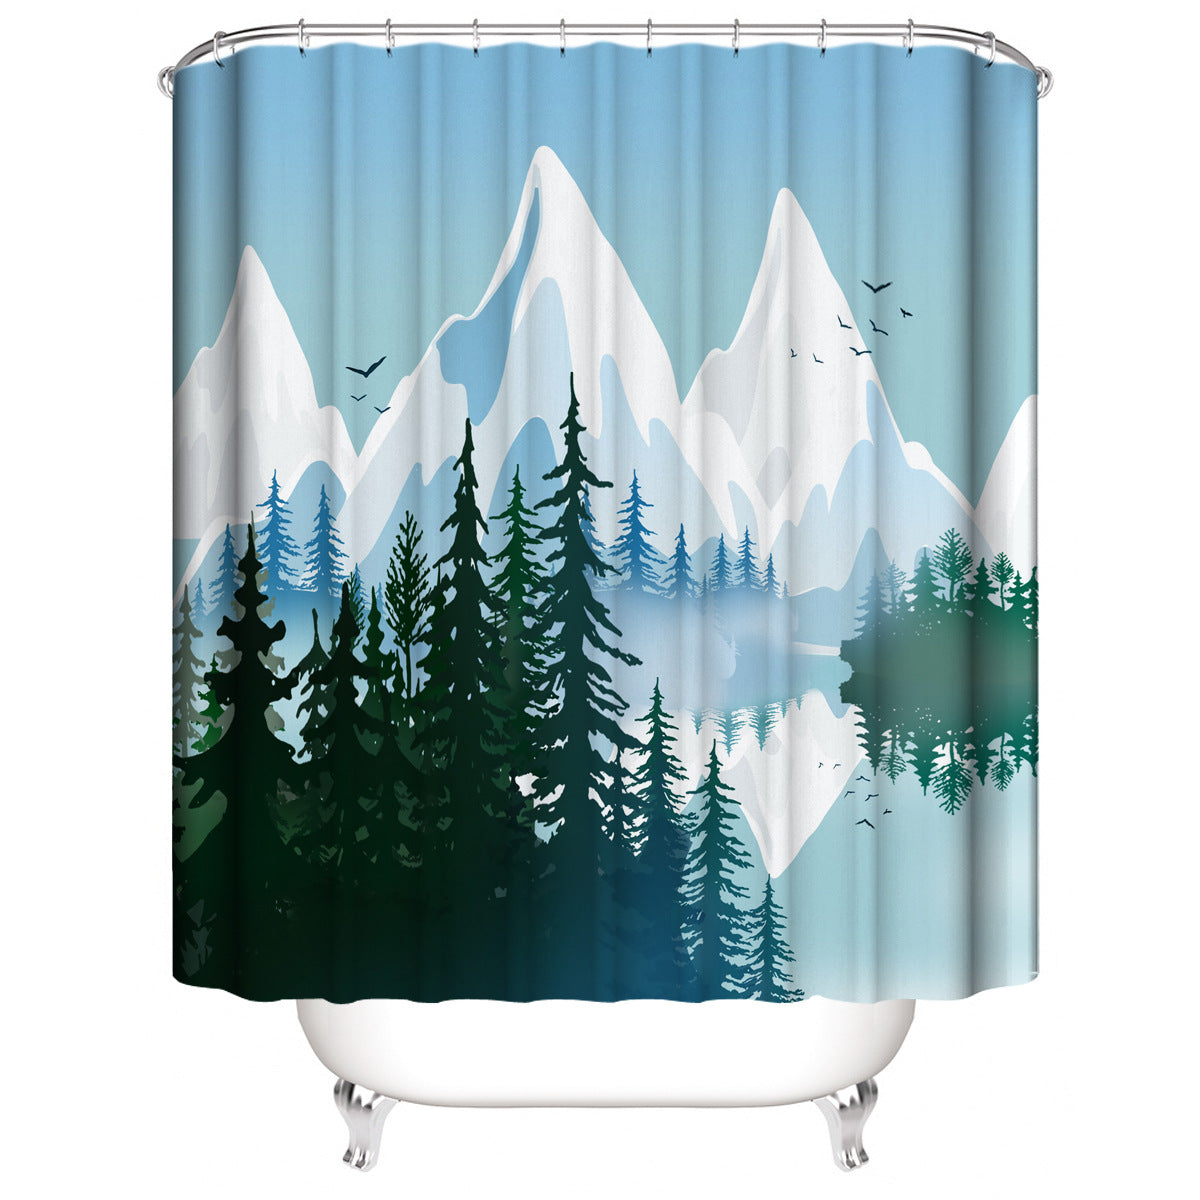 Northen Euro Snowberg Bathroom Fabric Shower Curtain Sets-Shower Curtains-Shower Curtain+3Pcs Mat-Free Shipping Leatheretro